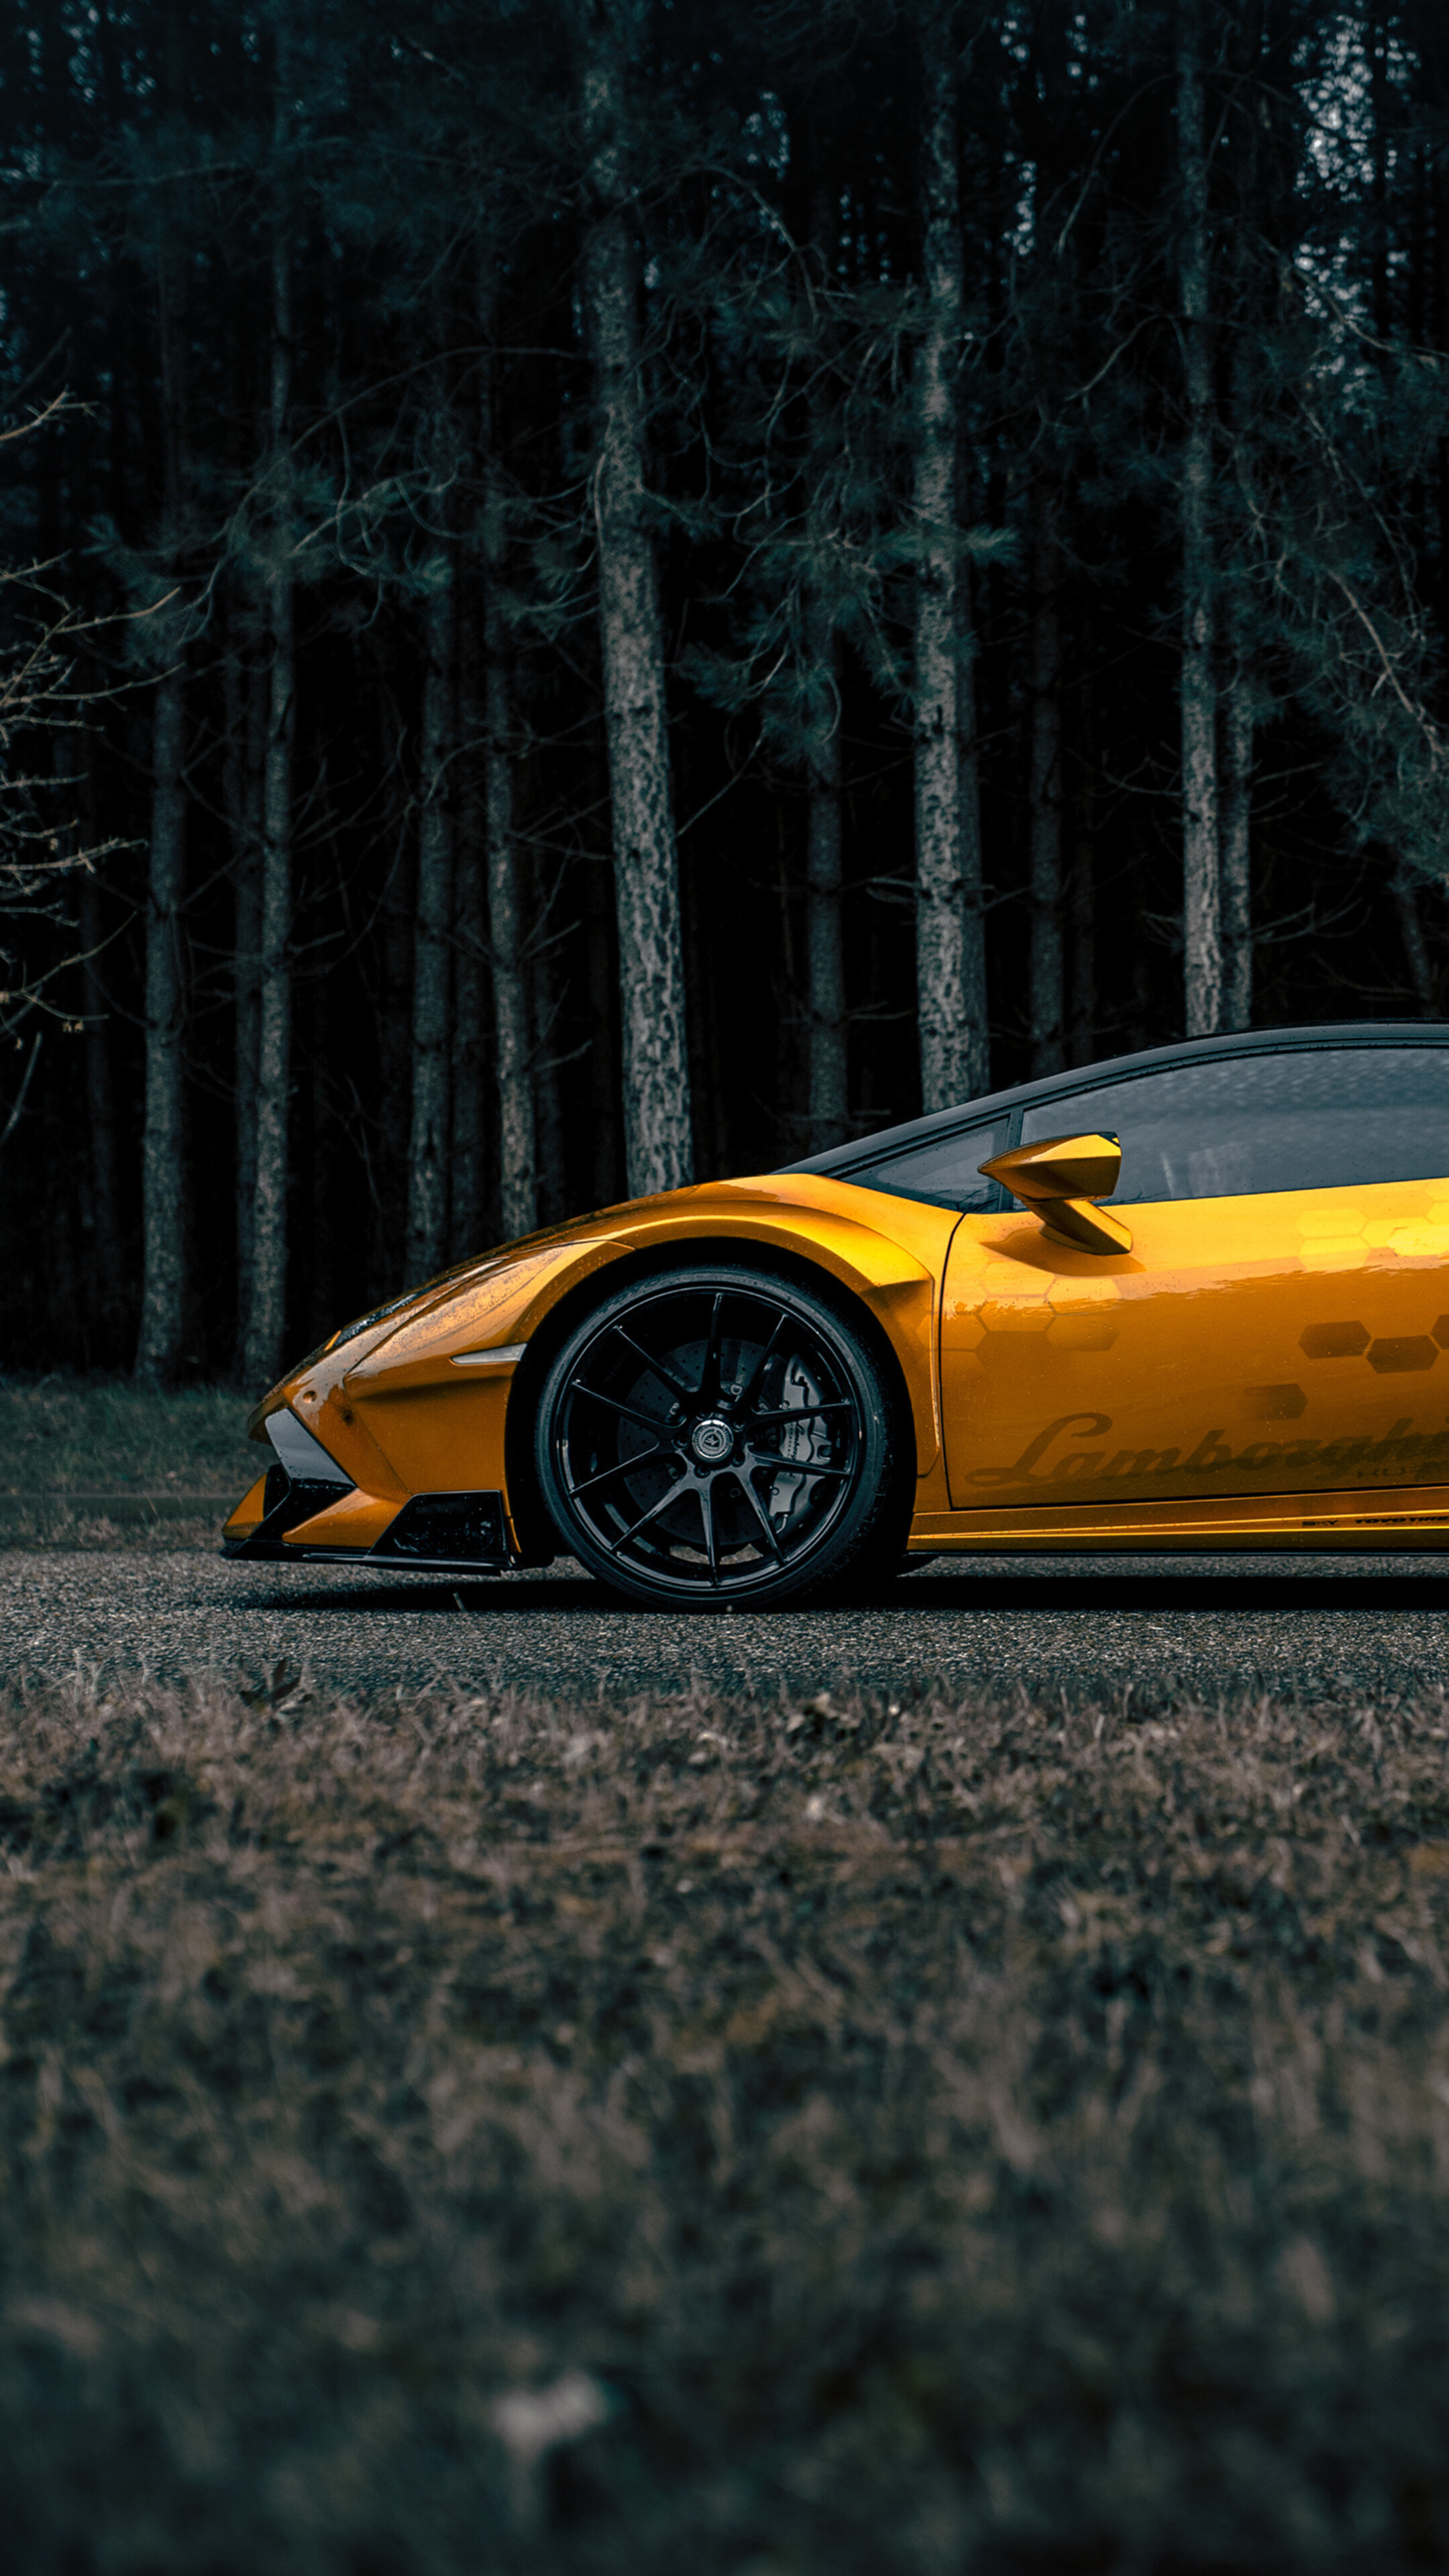 Gold Lamborghini: Huracan, A sports car manufactured by an Italian automotive manufacturer replacing the Gallardo. 2160x3840 4K Background.